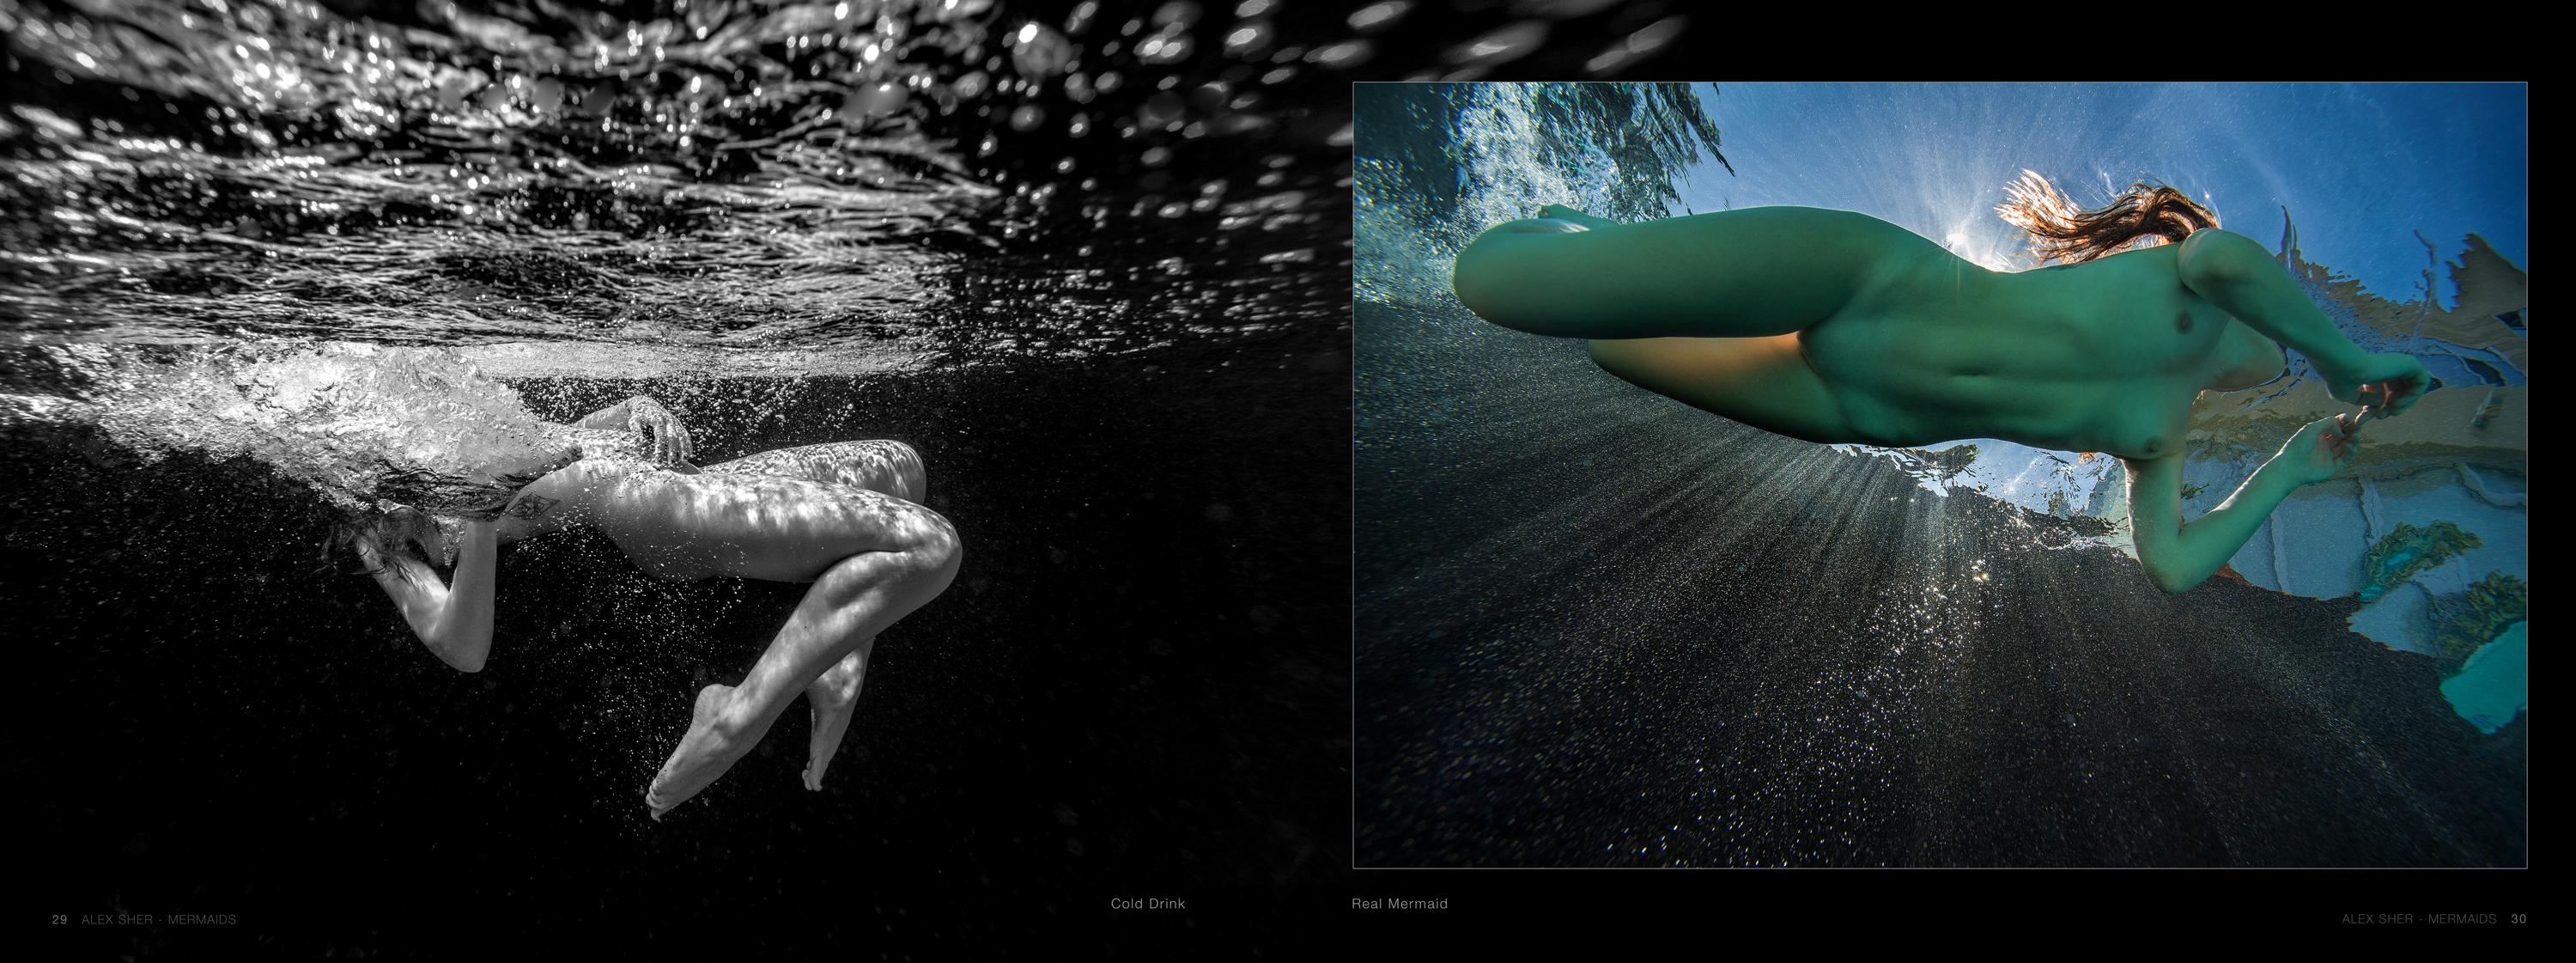 Mermaids -  a book of underwater nude and ocean wildlife photographs 4